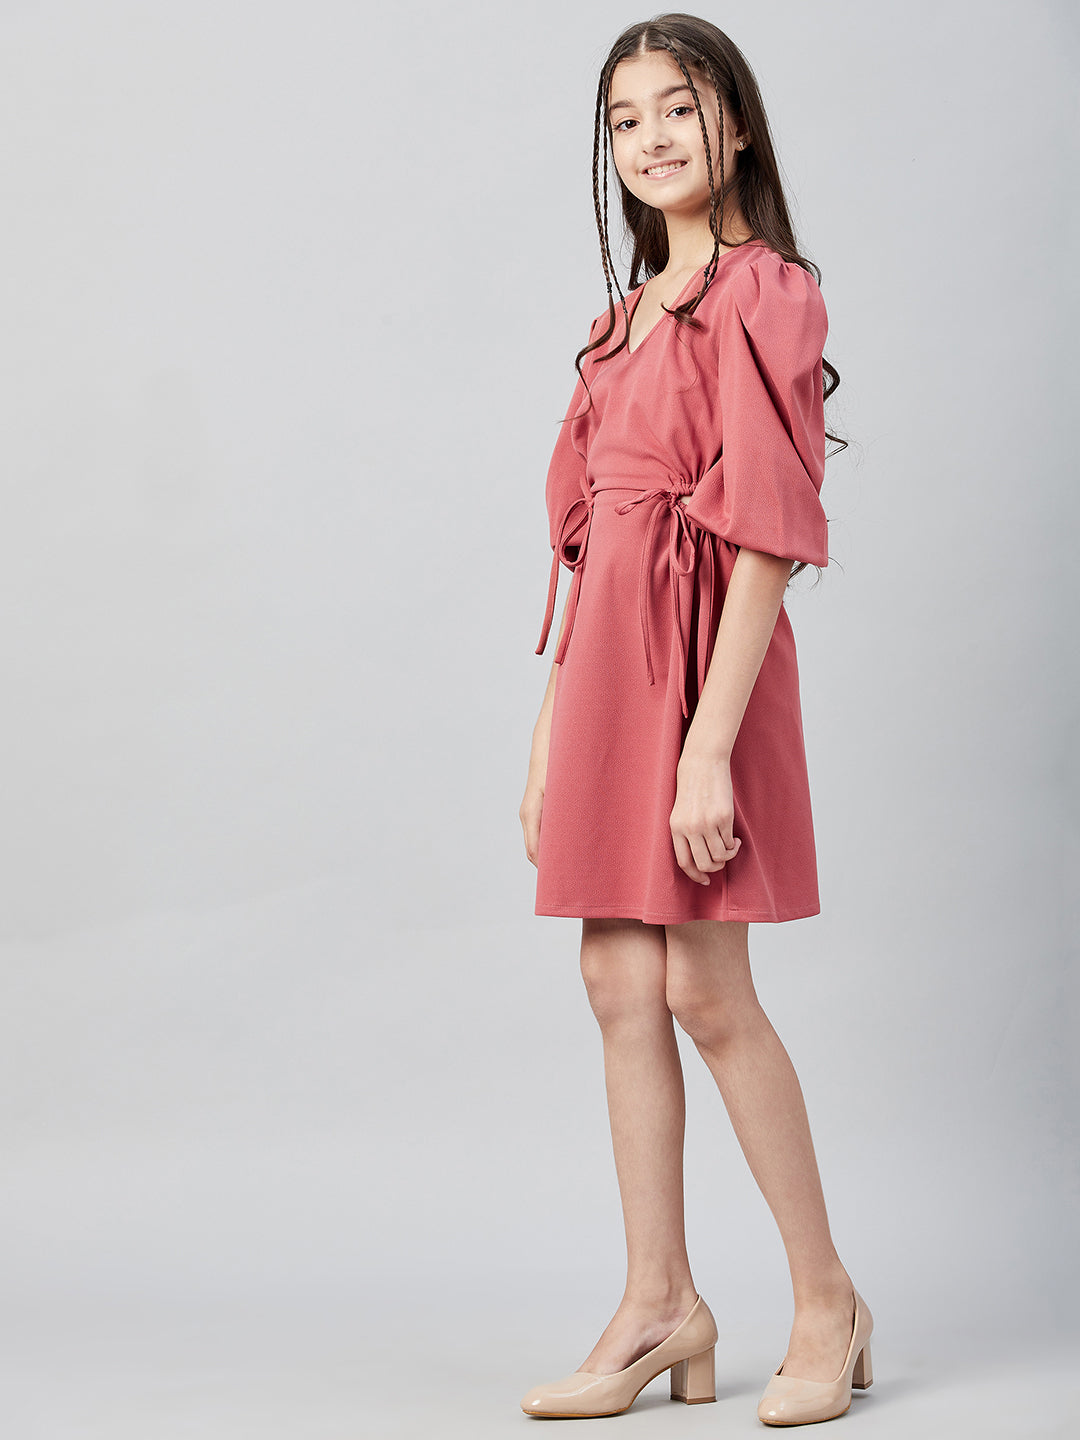 Athena Girl Pink Dress - Athena Lifestyle